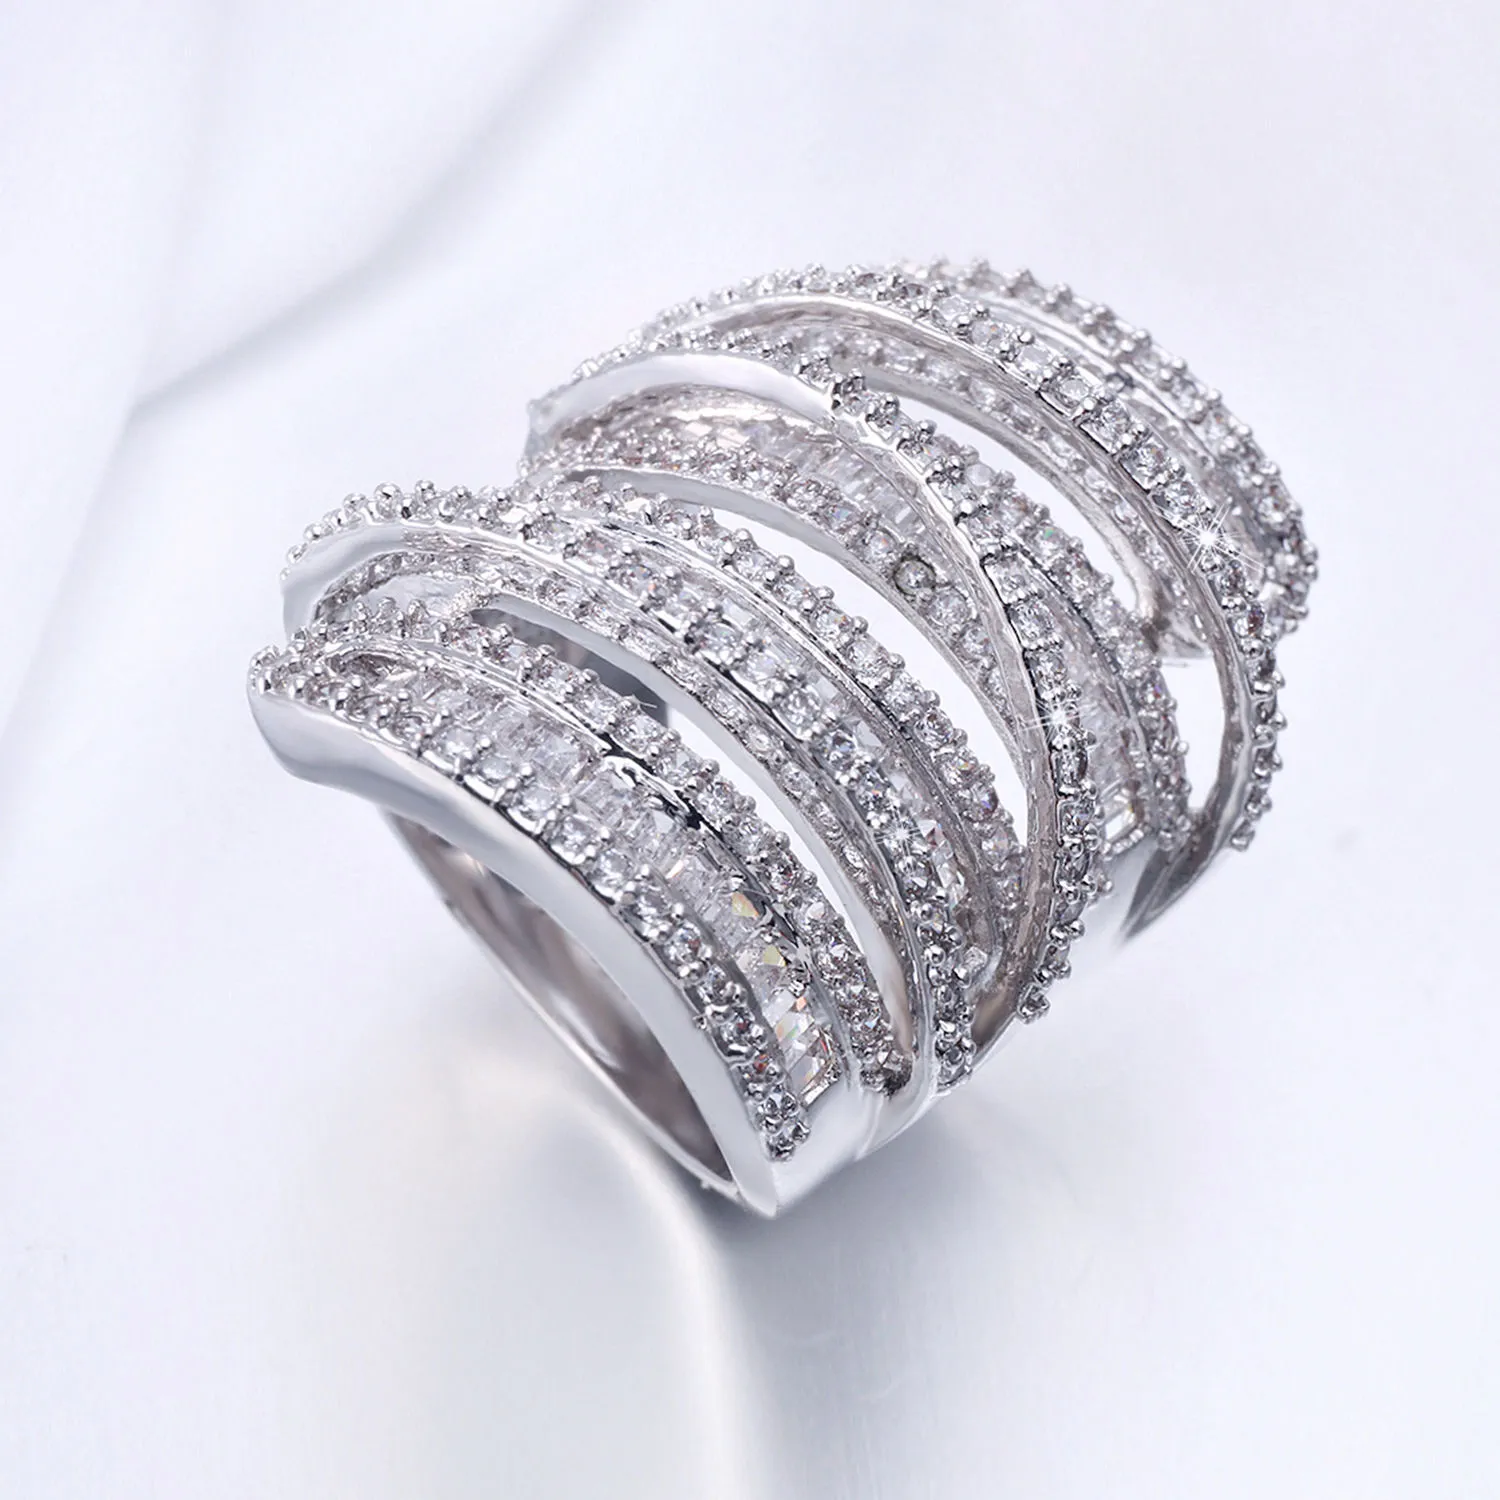 Full Princess Cut Luxury Jewelry 925 Sterling Siver 925 Sterling Silver White Sapphire Simulated Diamond Gemstones Wedding Women Ring Sz5-11